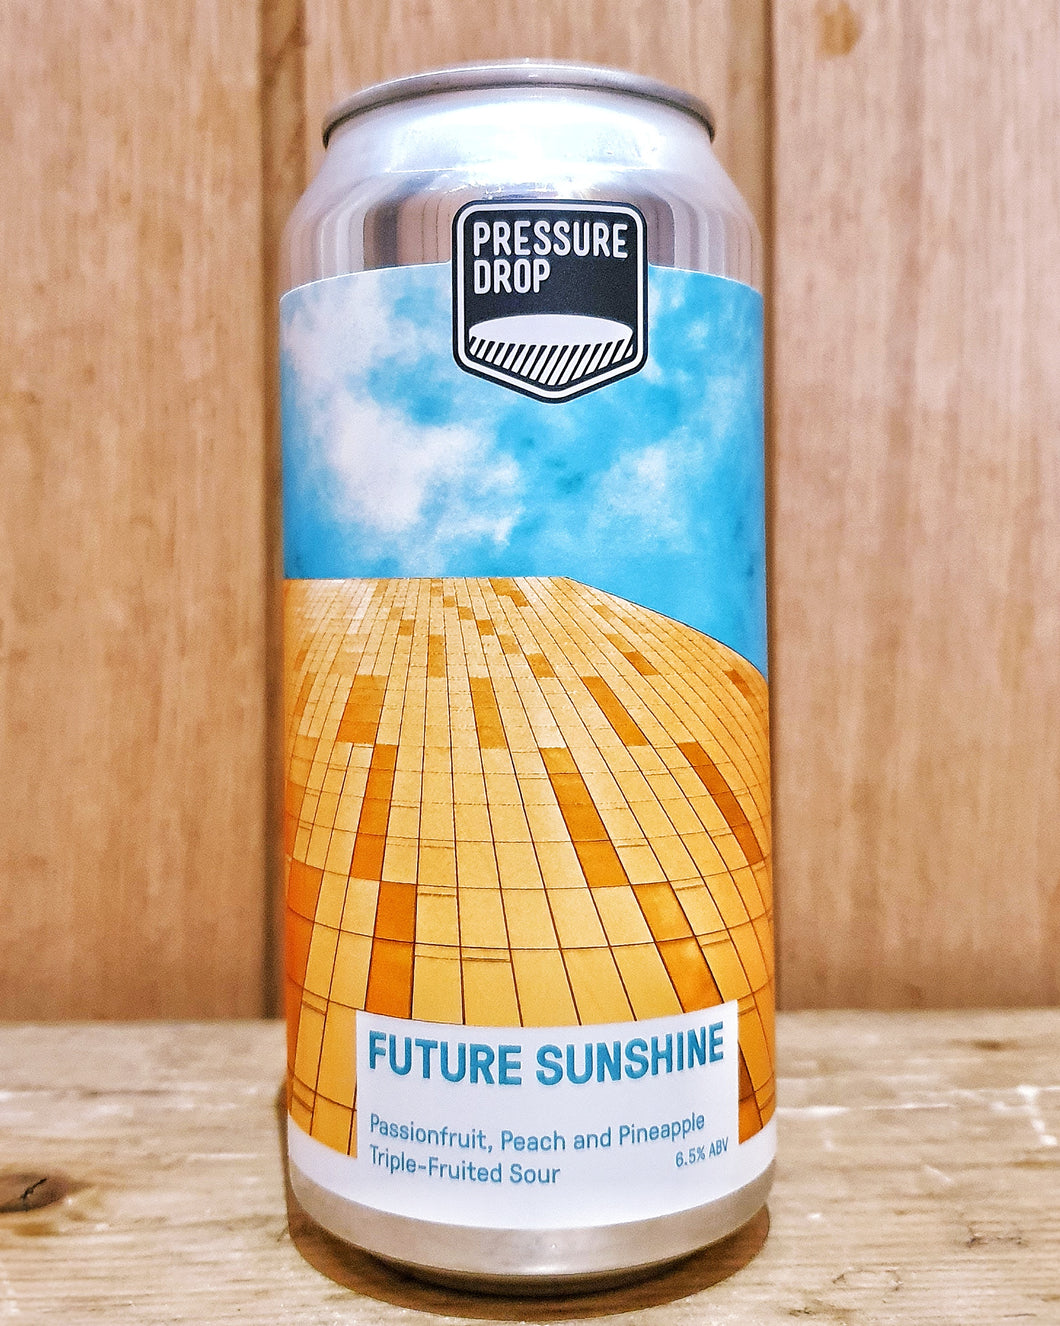 Pressure Drop - Future Sunshine